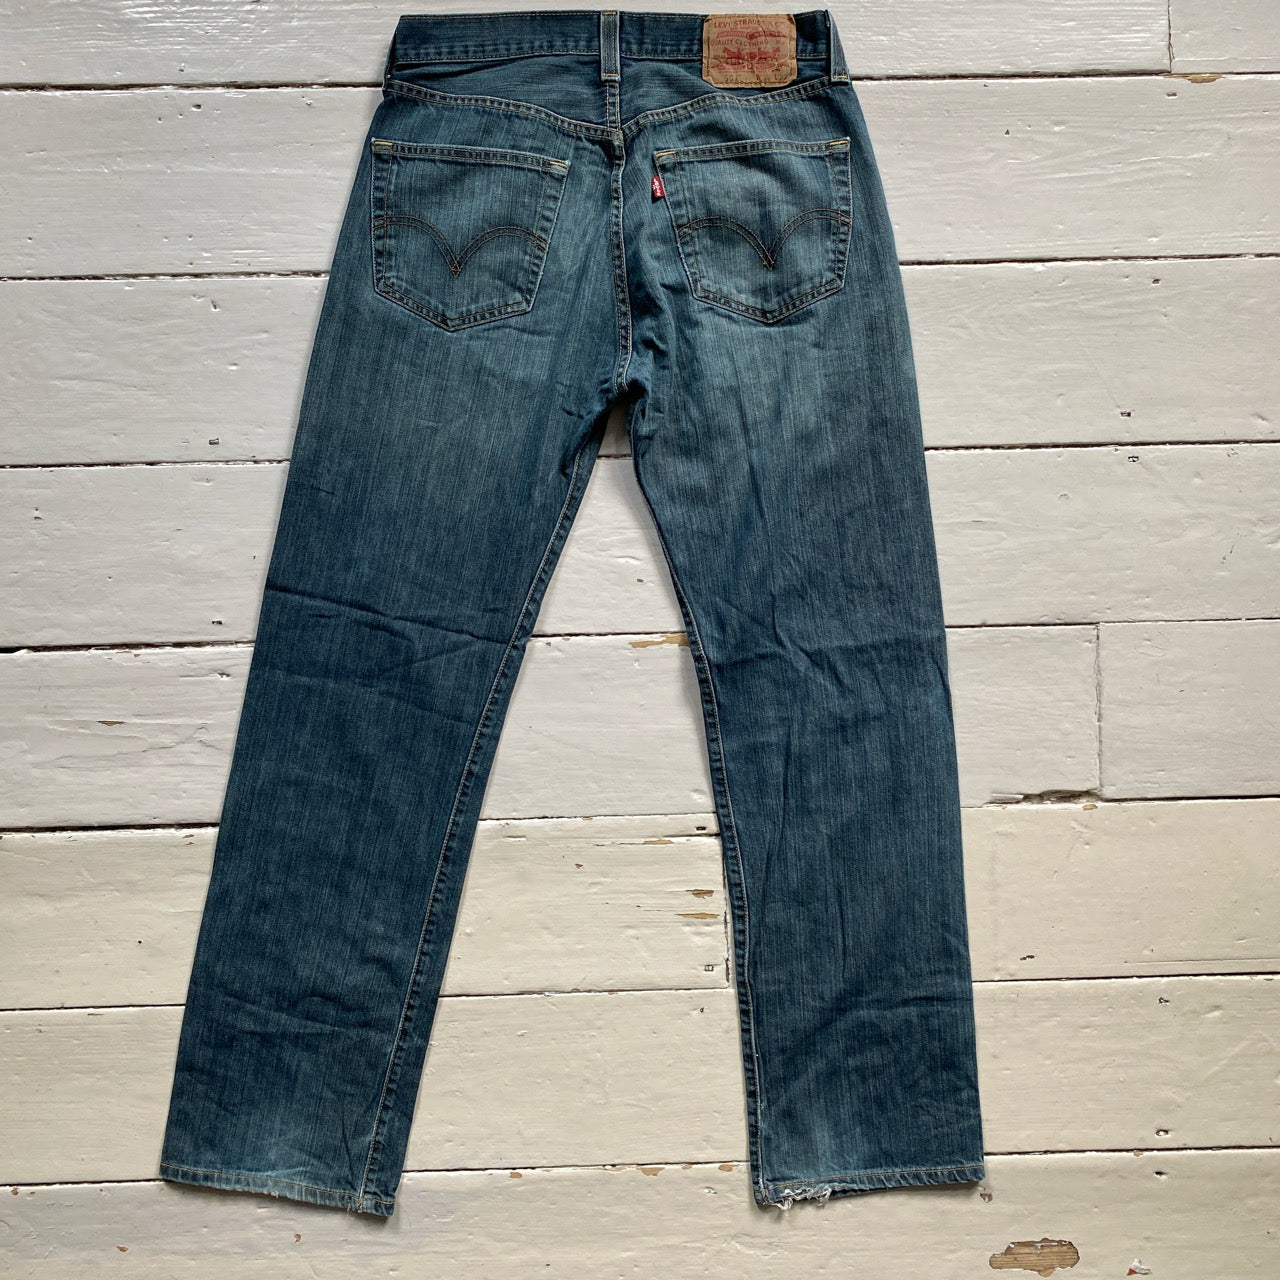 Levis 501 Light Fade Blue Jeans (31/31)